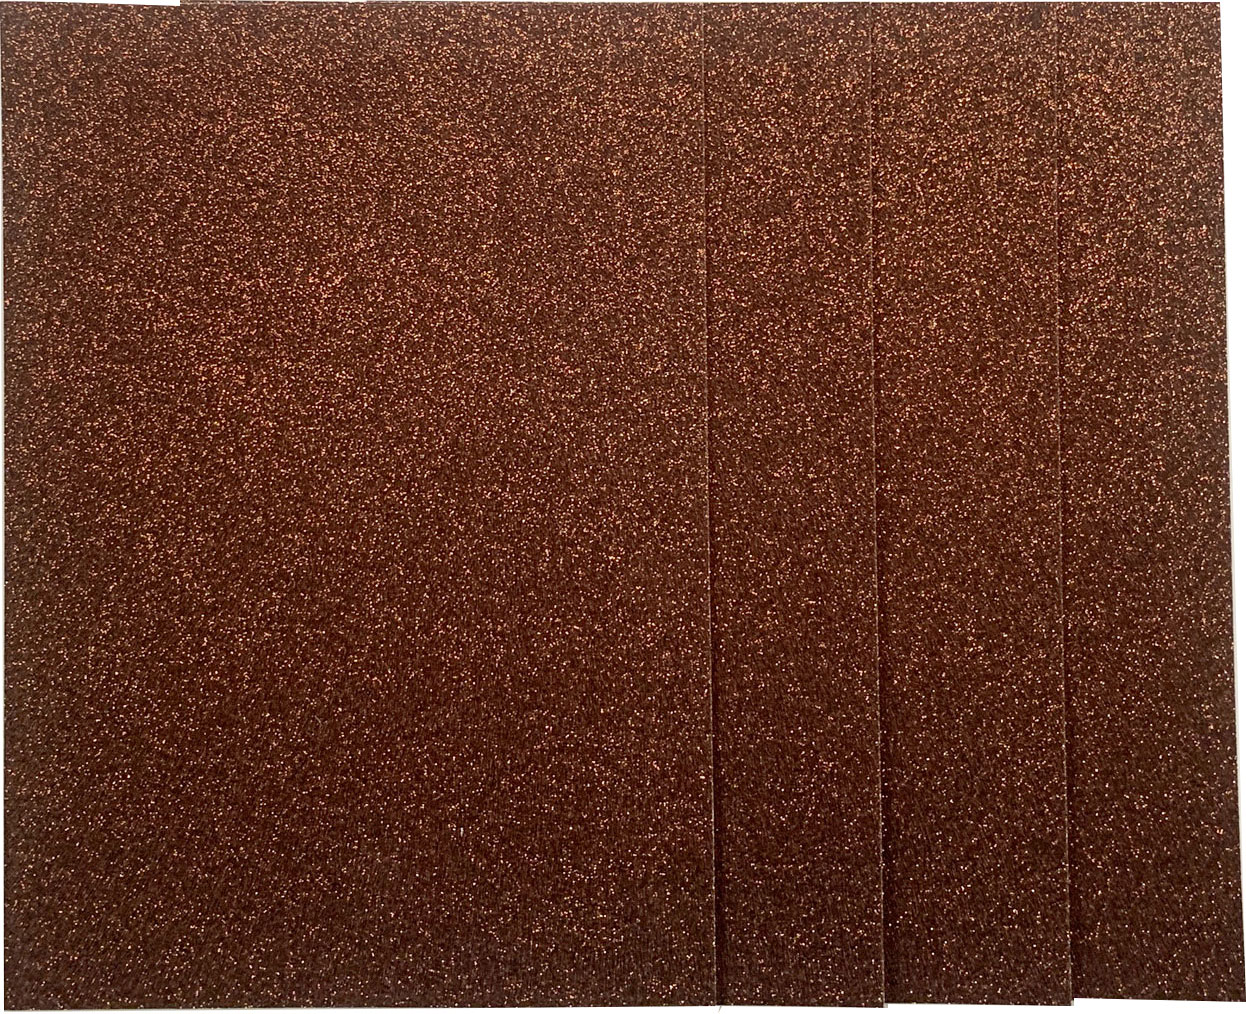 Brown Glitter Cardstock, 250gsm, 4 sheets